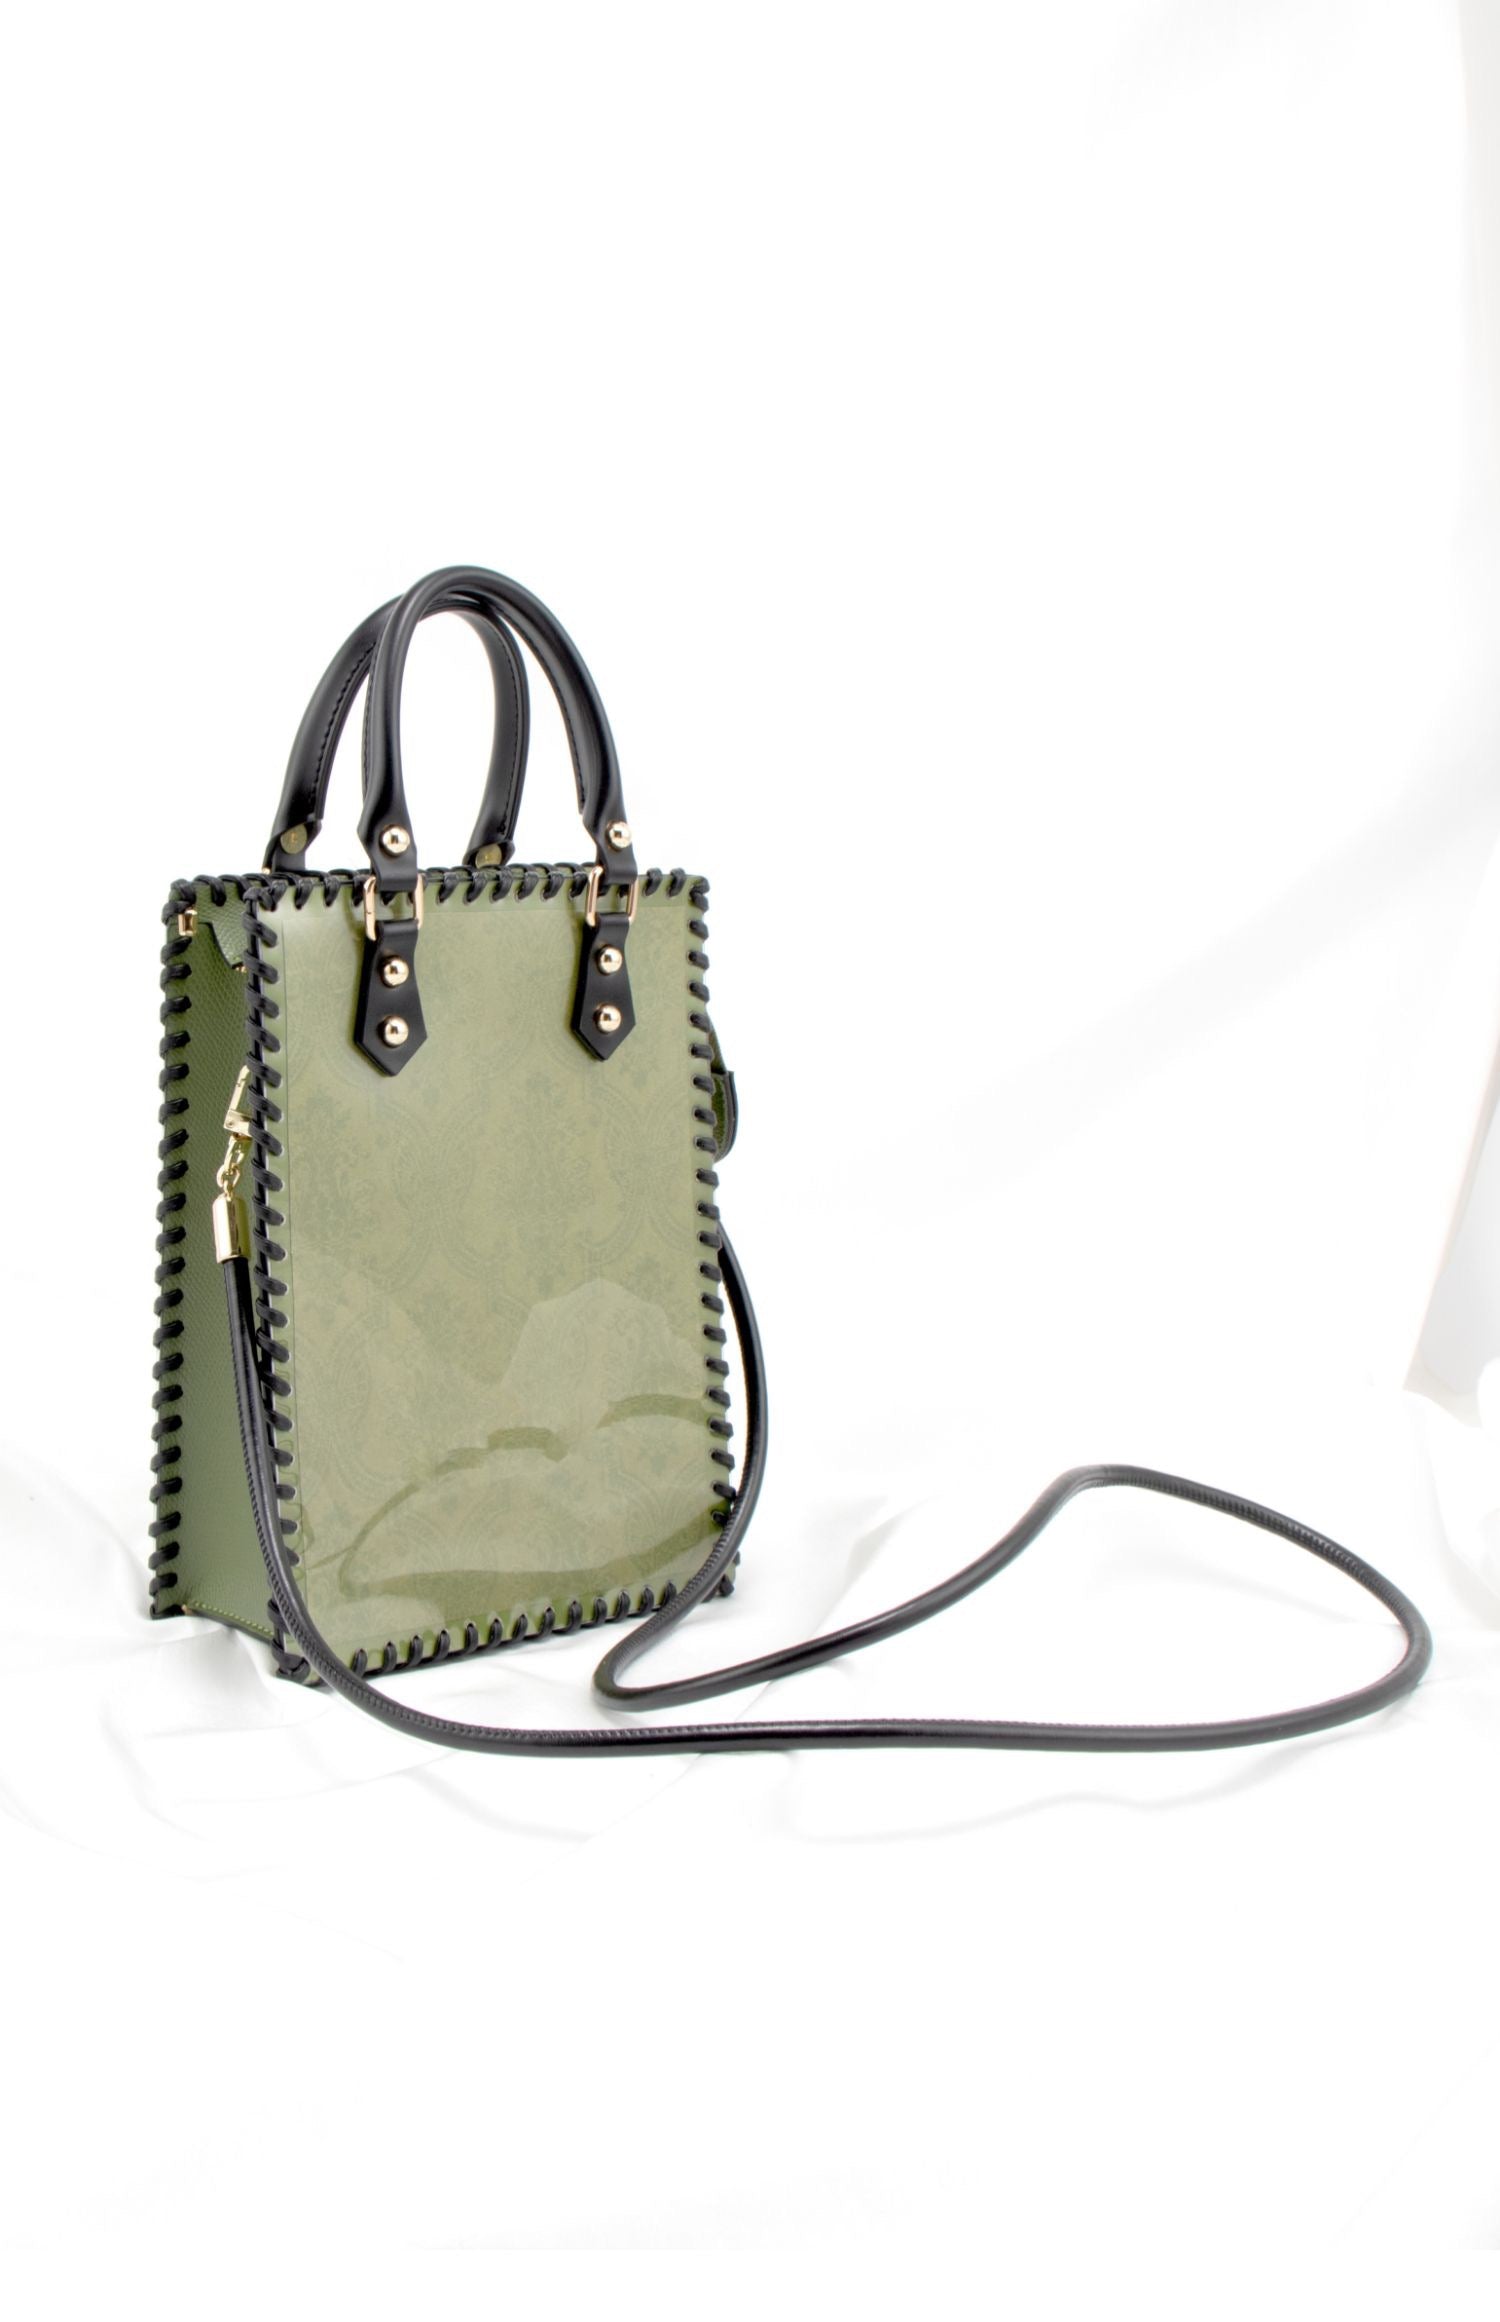 DIY Clear Shopping Bag Kit by winxinshop, D (15.7x6.3x13.4inch)